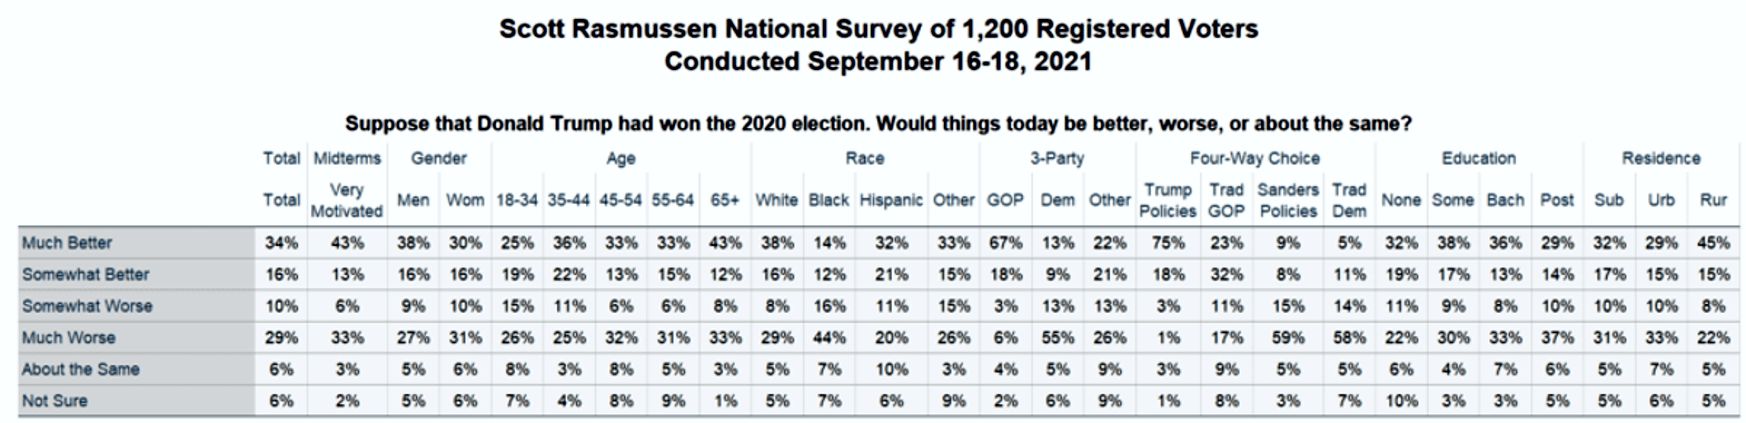 Scott Rasmussen National Survey of 1200 Registered Voters